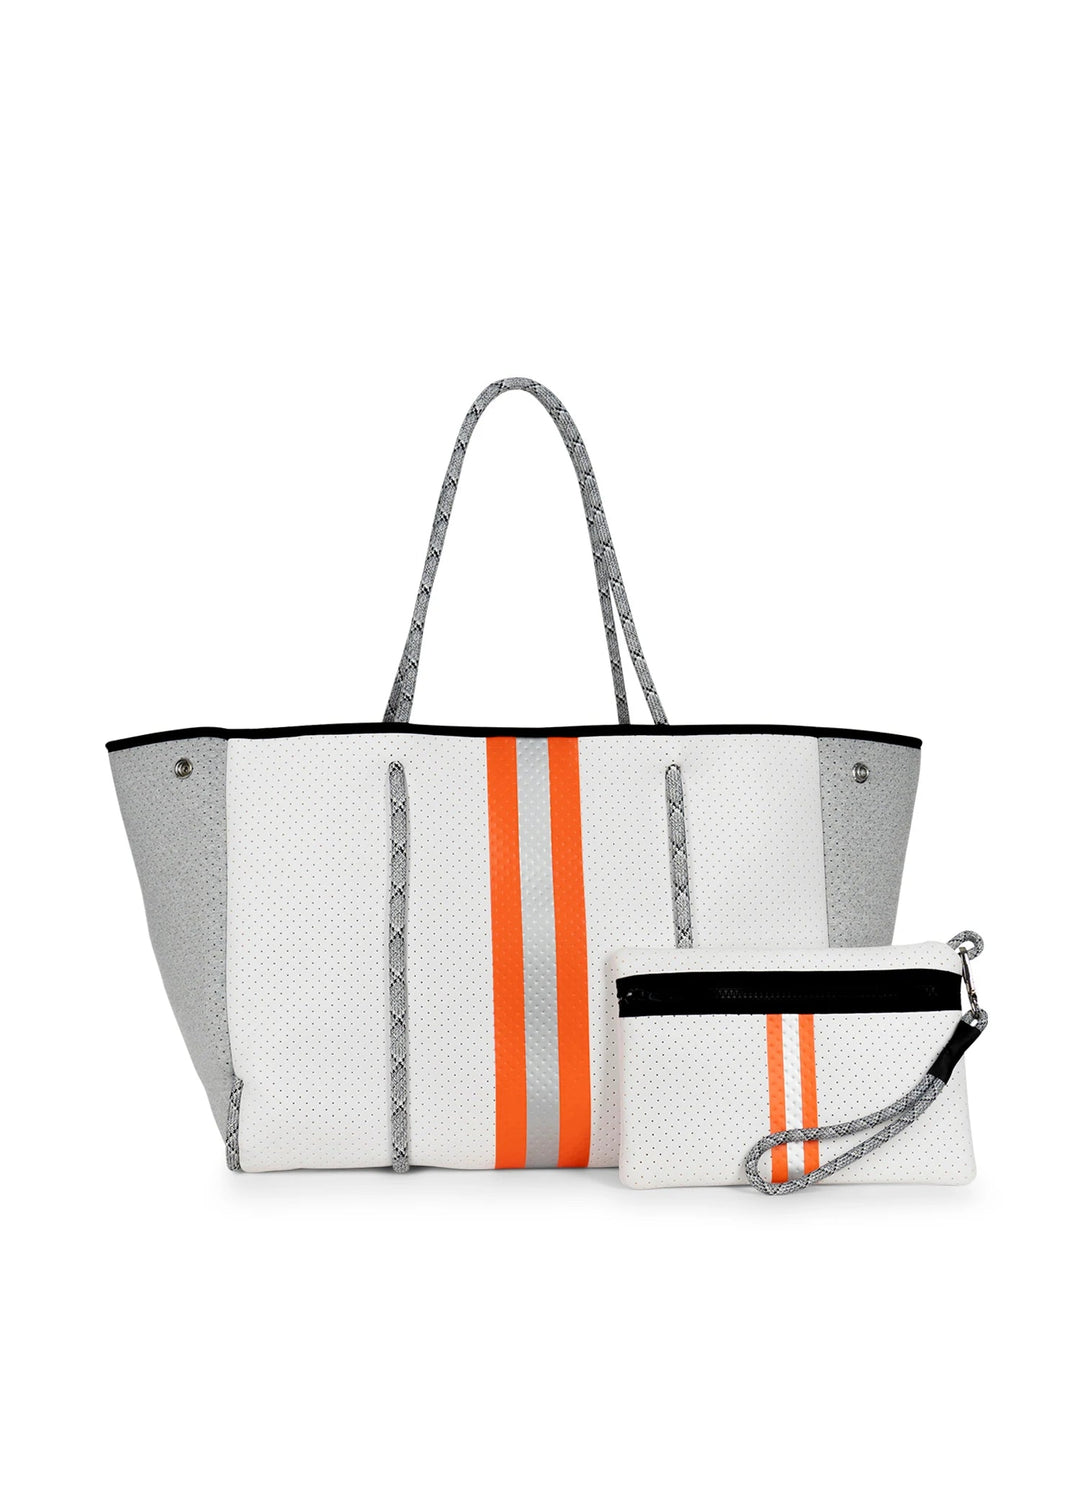 Haute Shore Pickleball Bag - Grey White Neoprene Quilted w/ Stripe Dill Lux